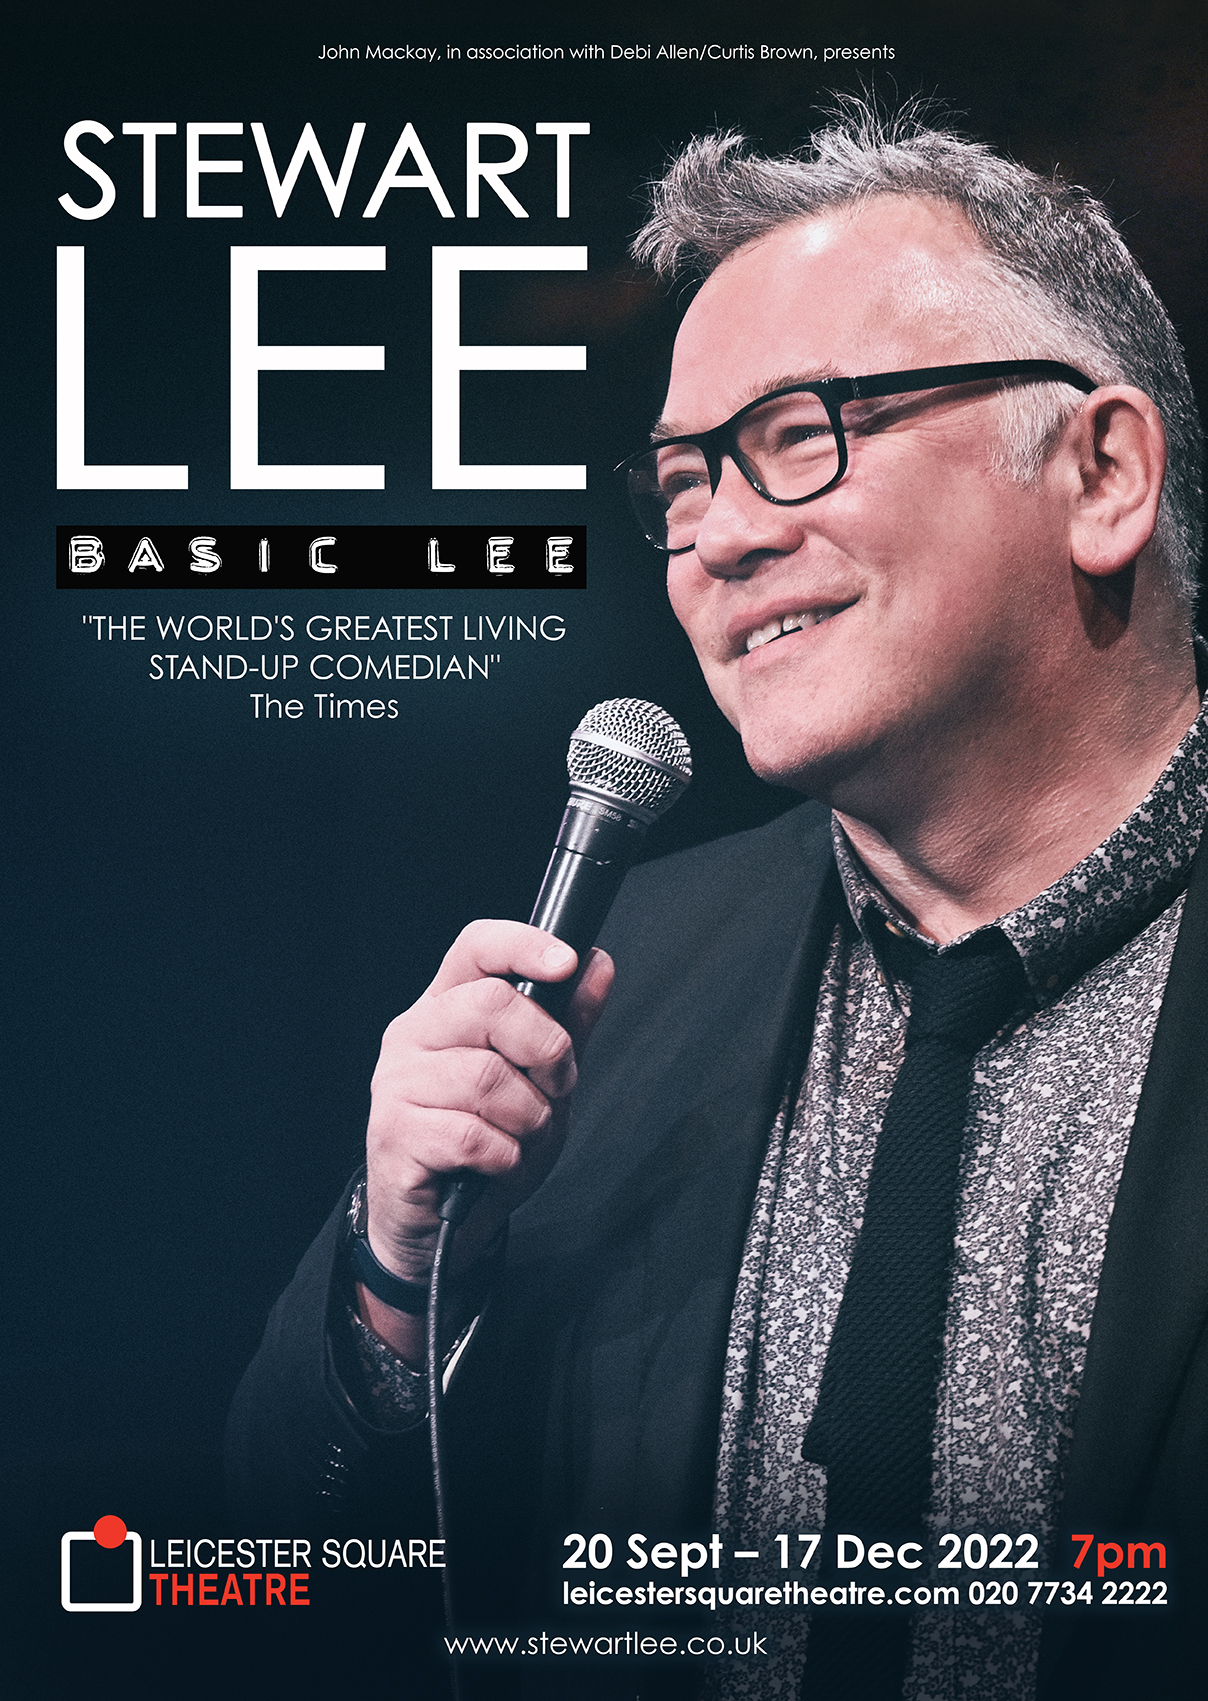 Basic Lee